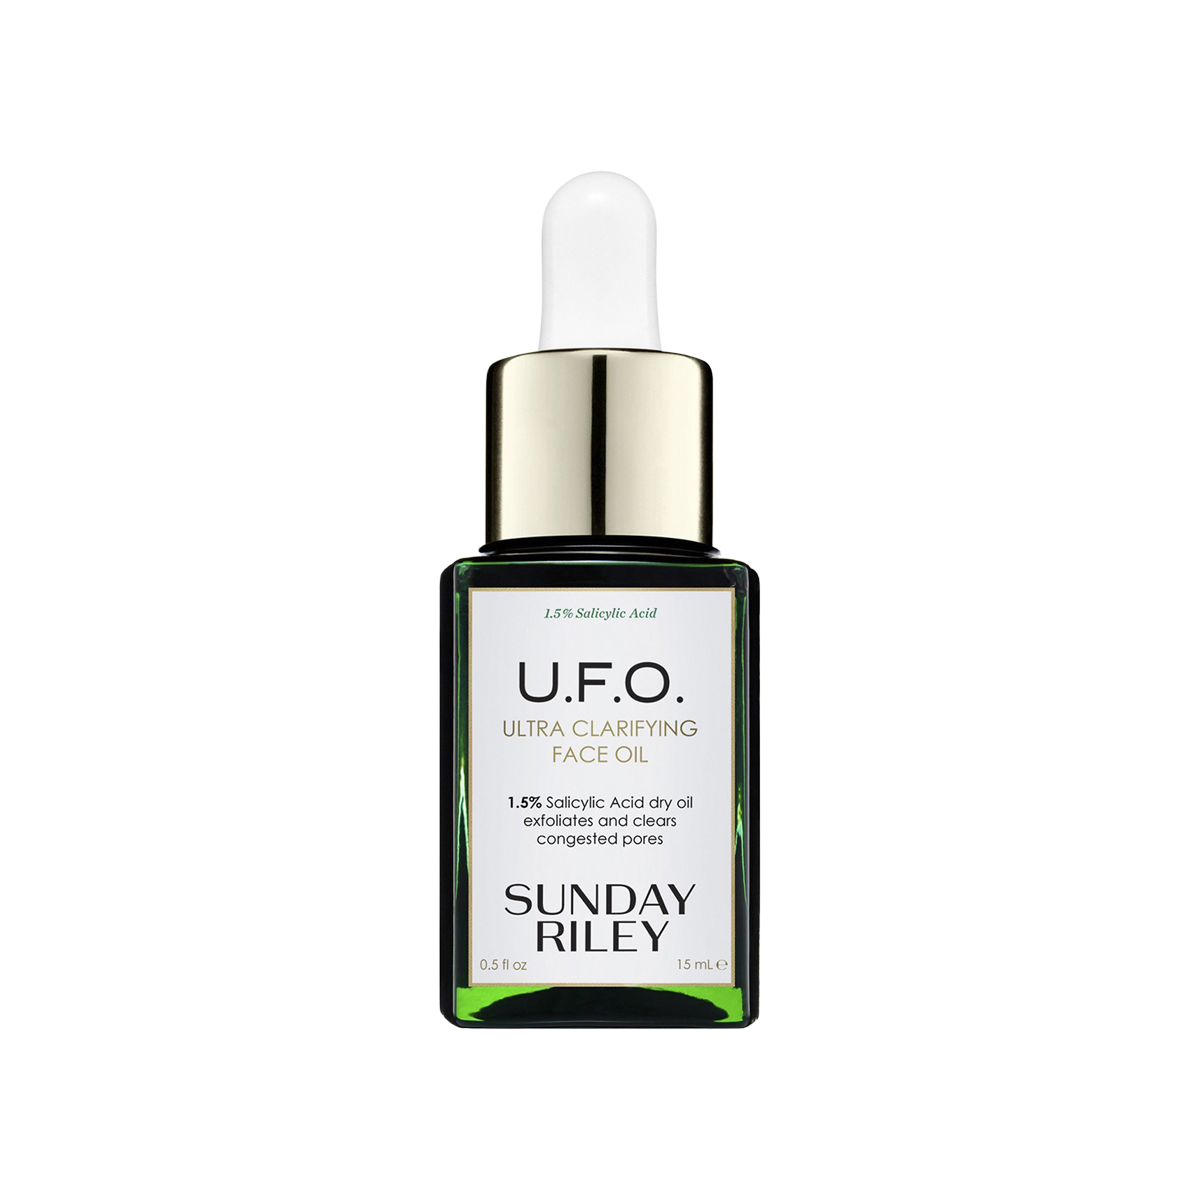 Sunday Riley - U.F.O. Ultra Clarifying Treatment Face Oil